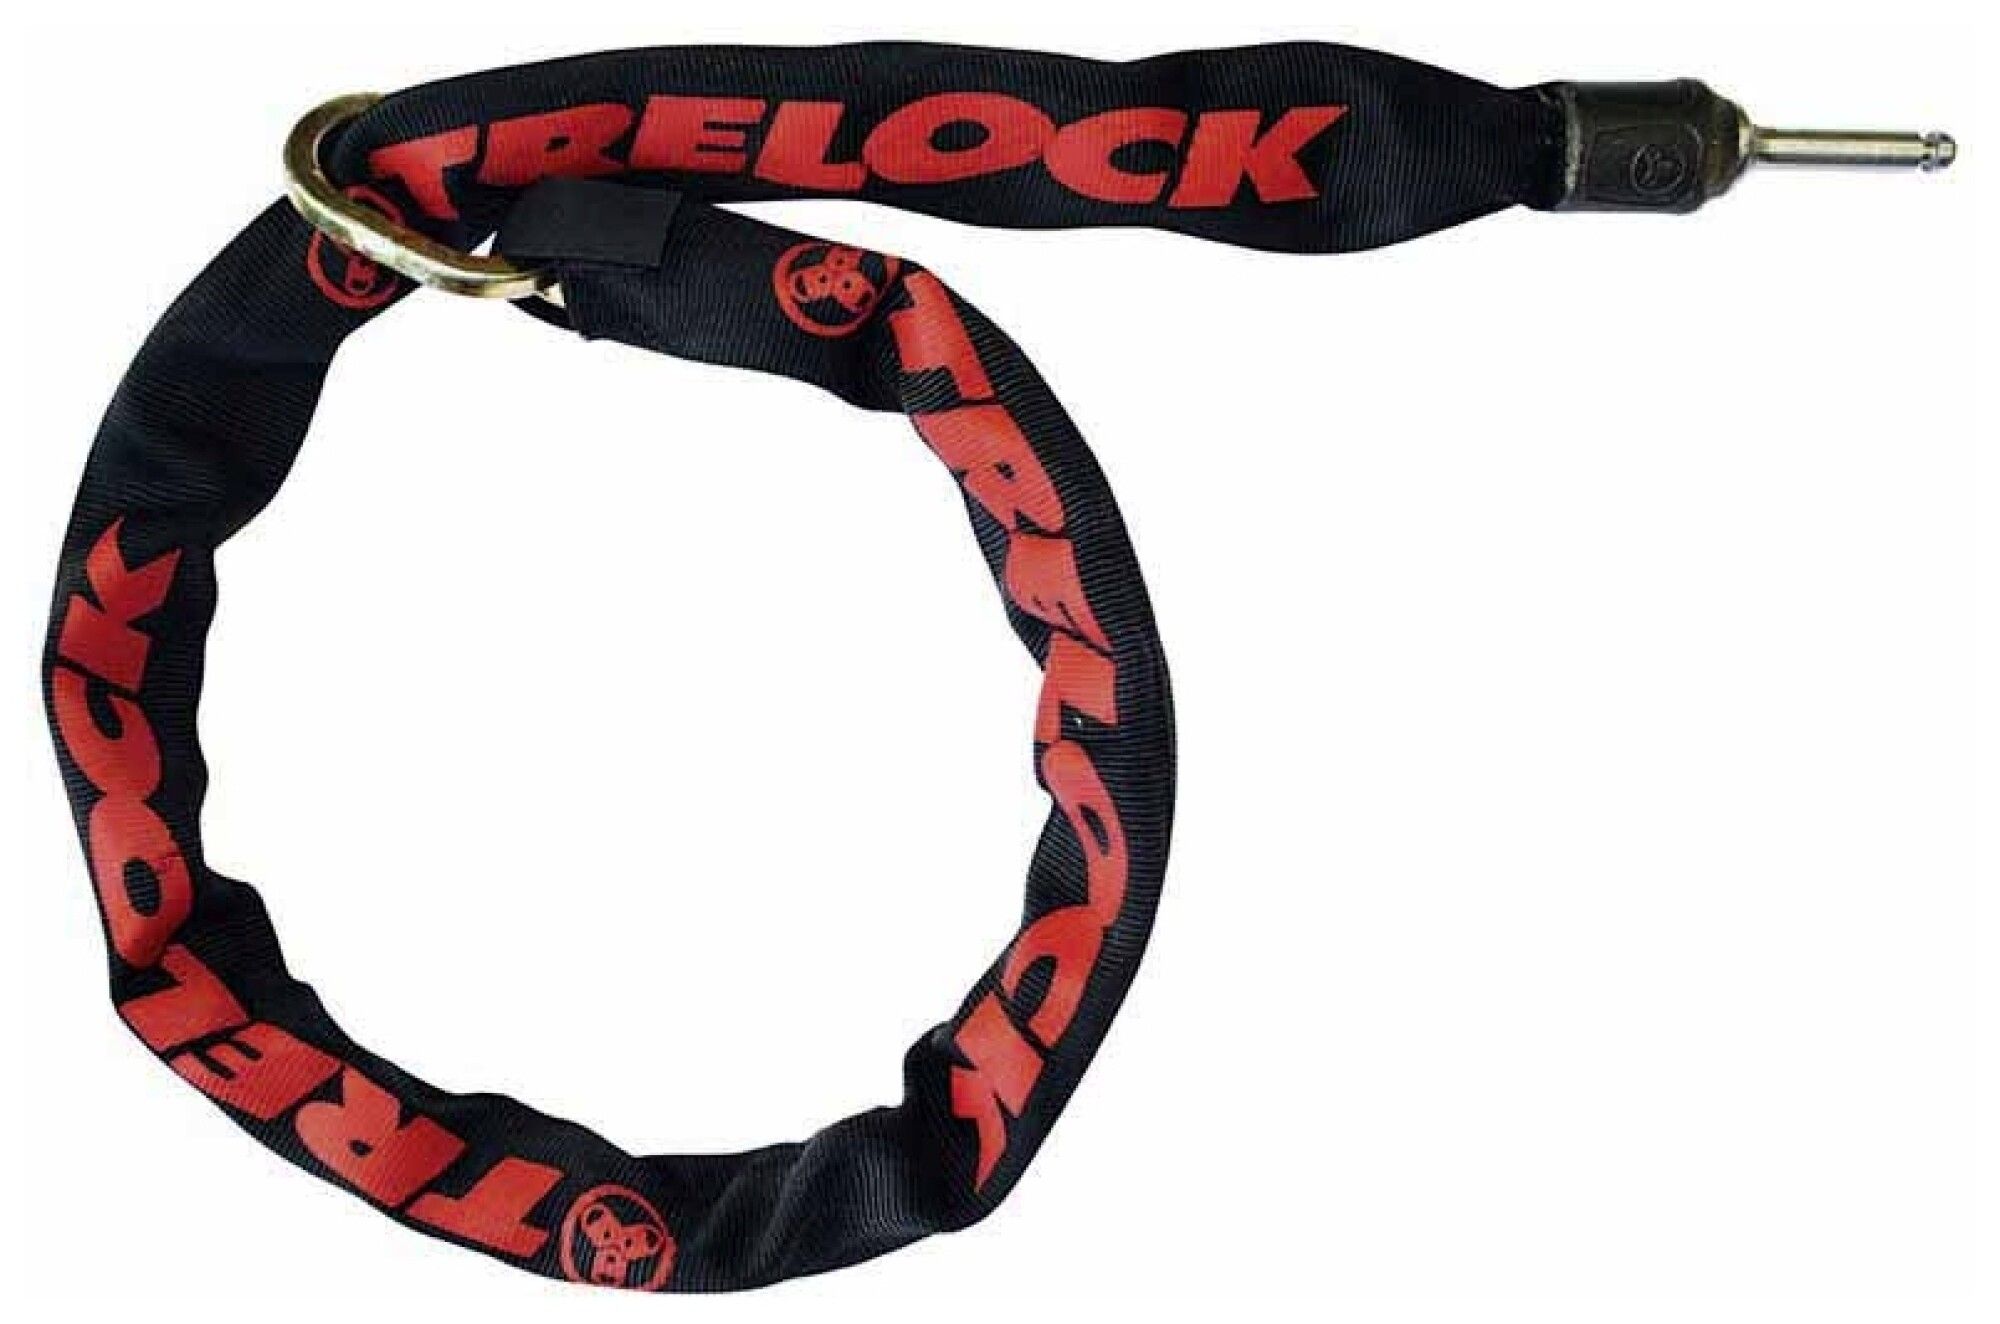 Trelock ZR 455/140 mit Tasche / incl. bag (Bild 1)